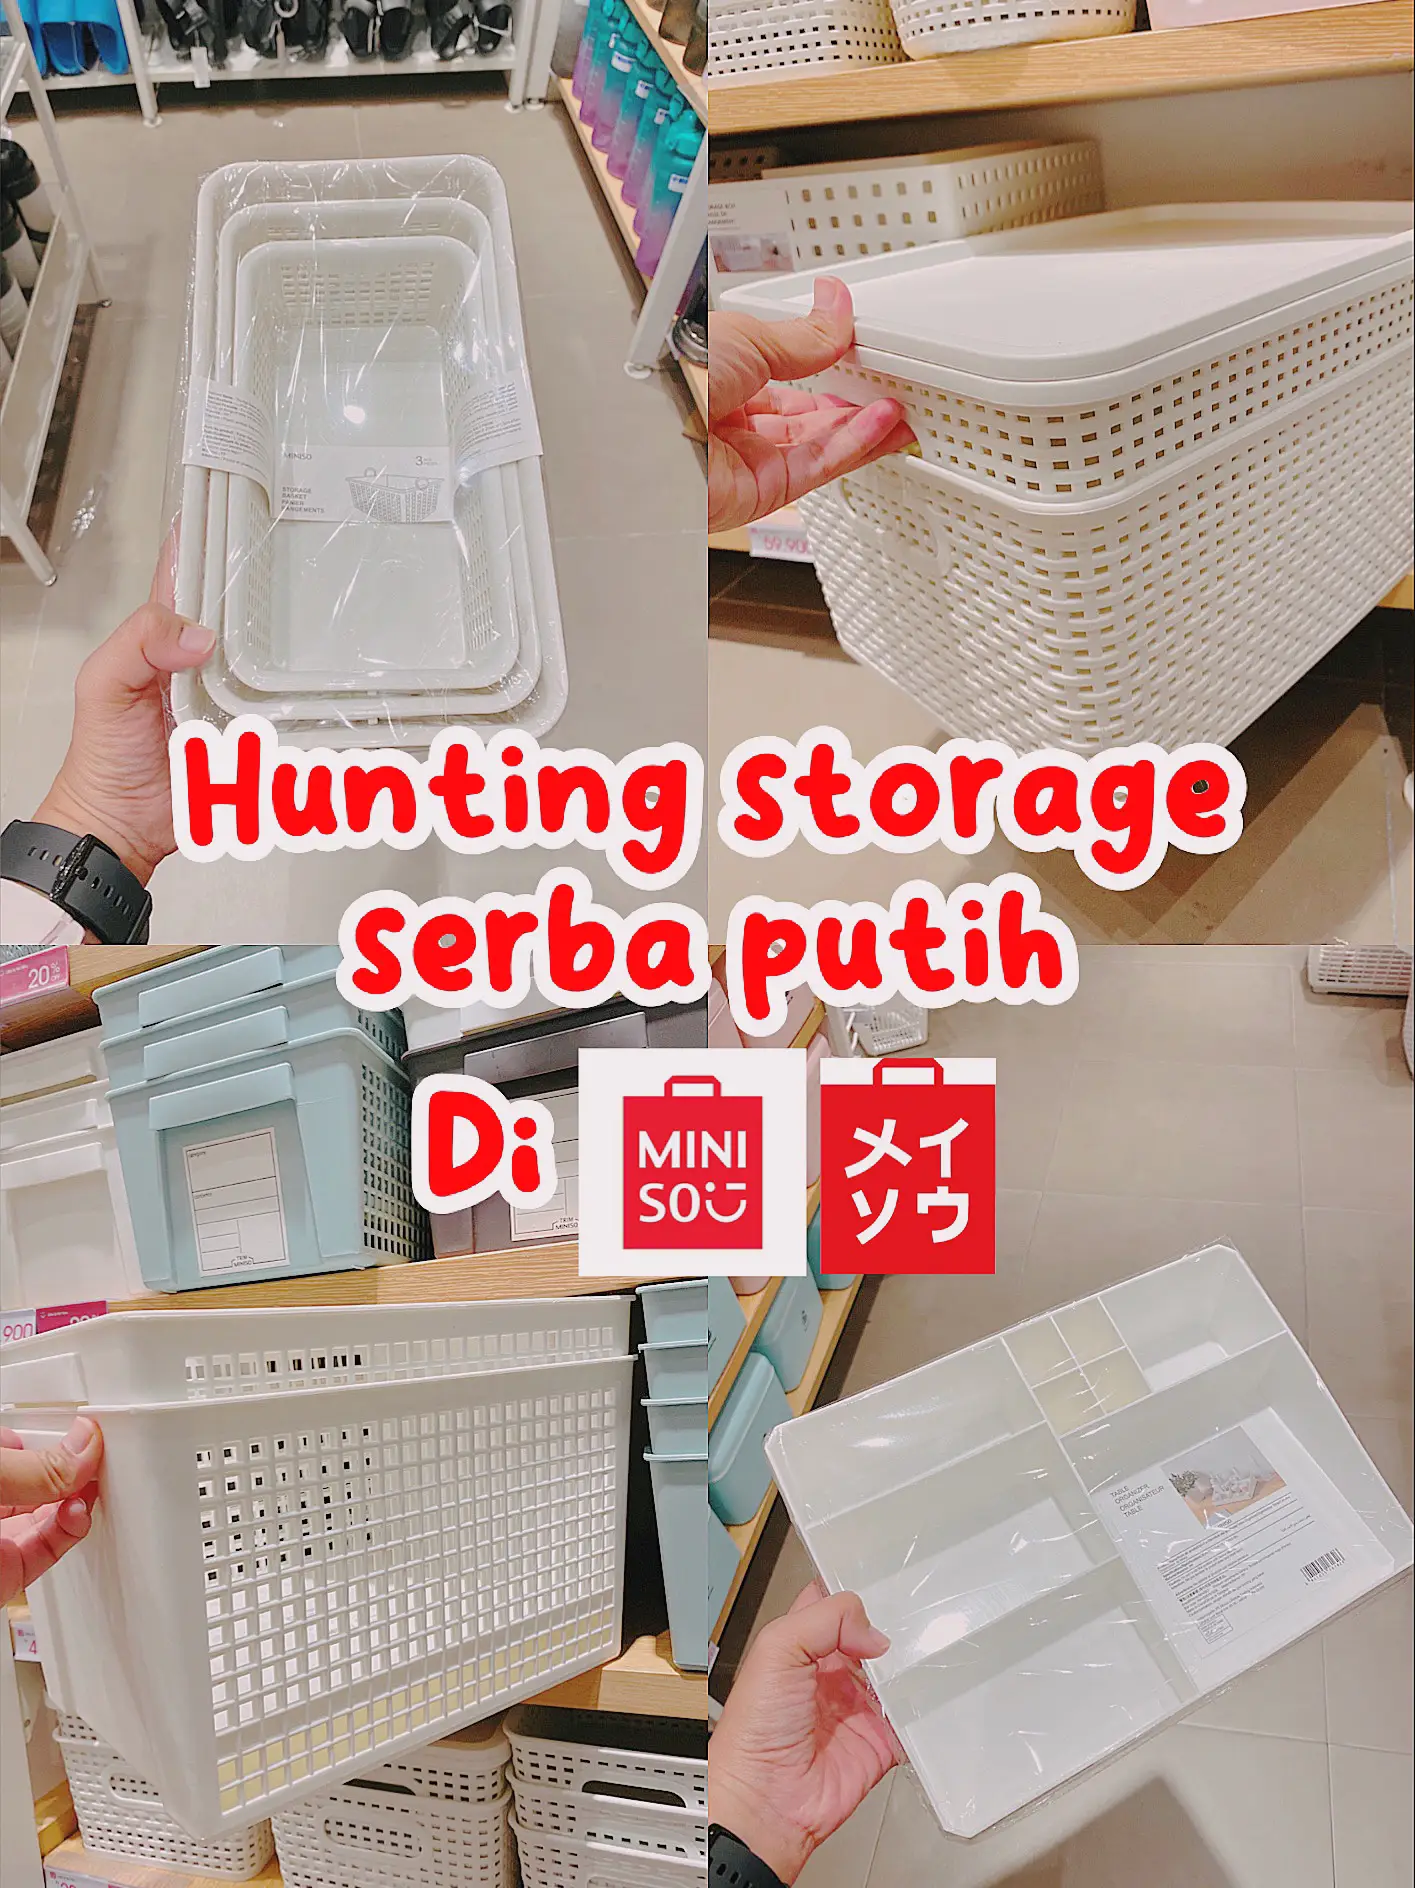 Hunting storage serba putih di miniso🤩, Gallery posted by Ruri_ferori